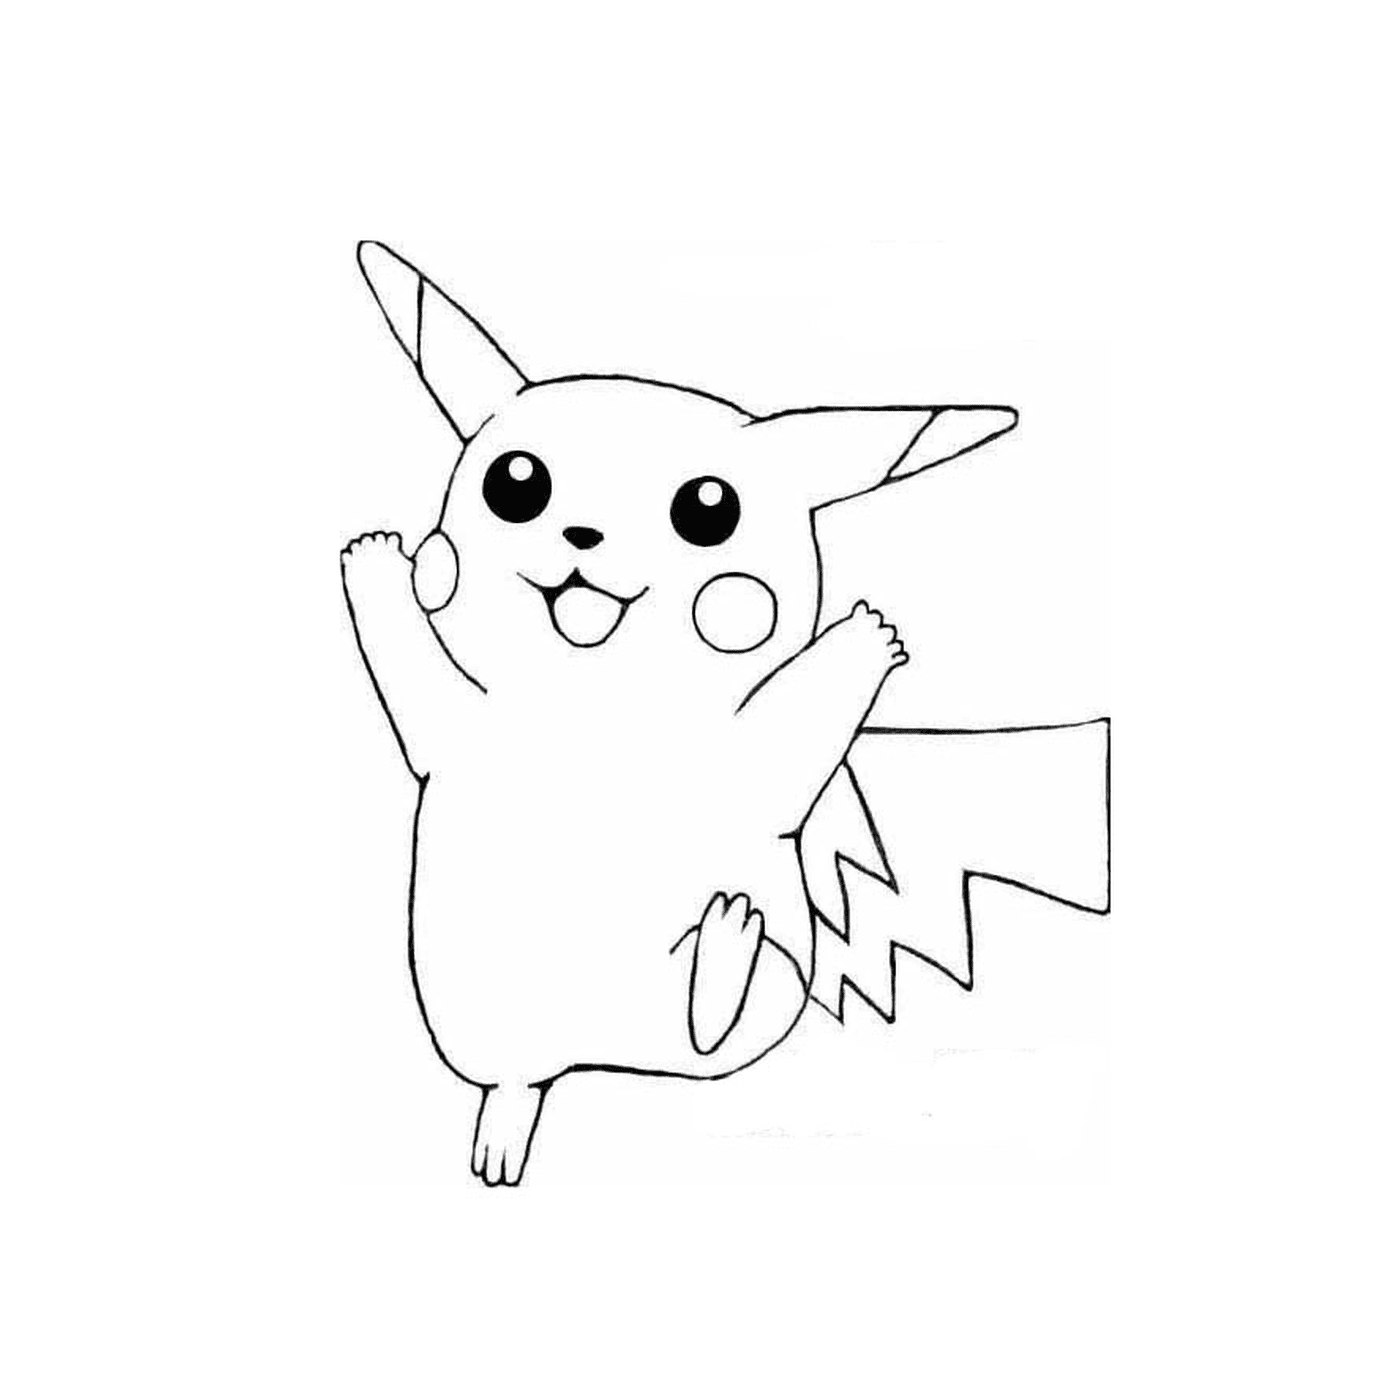  Pikachu in versione facile da disegnare 